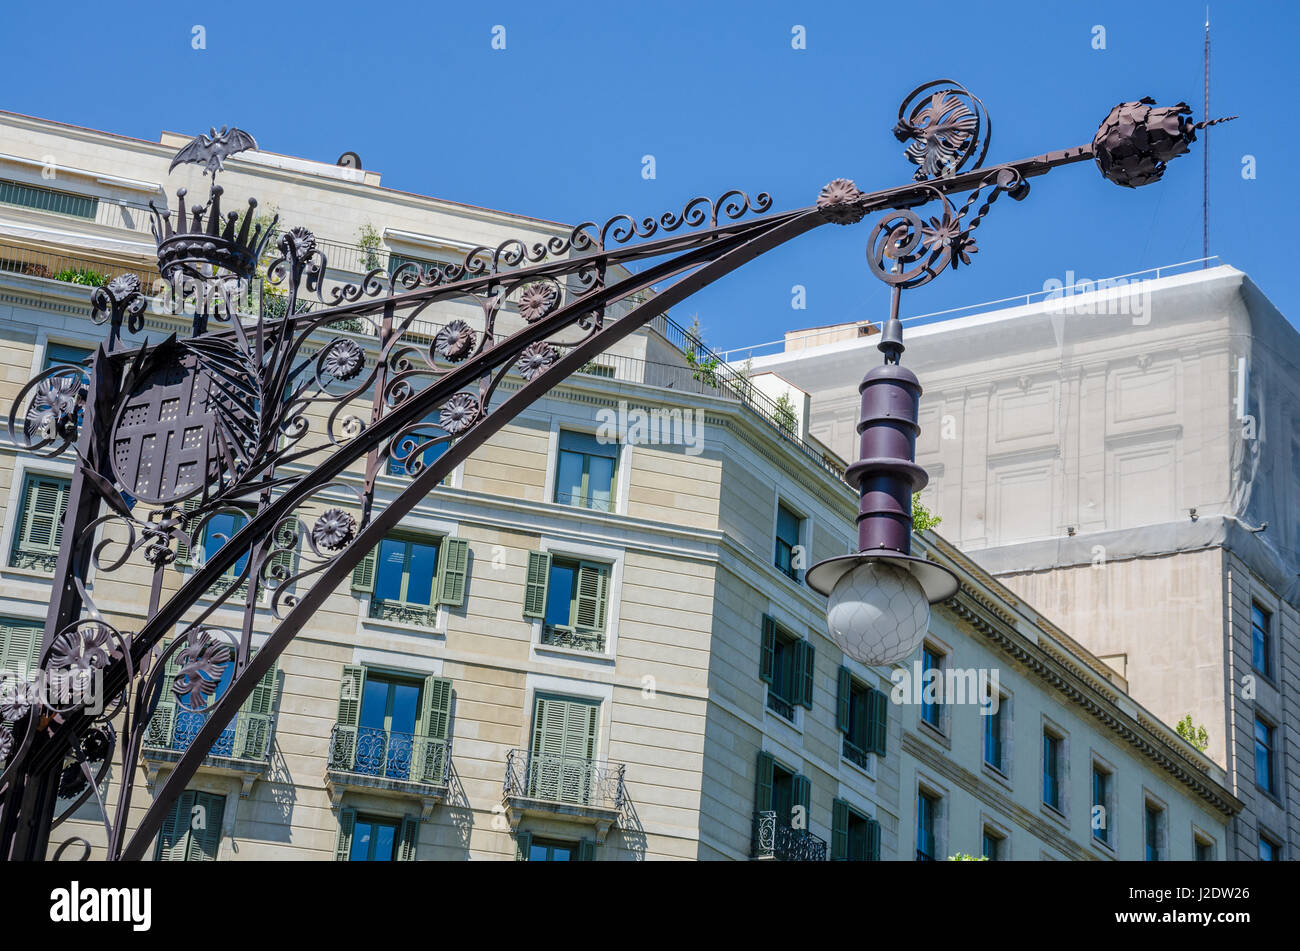 An ornate street light on a street in Barcelona. Stock Photo